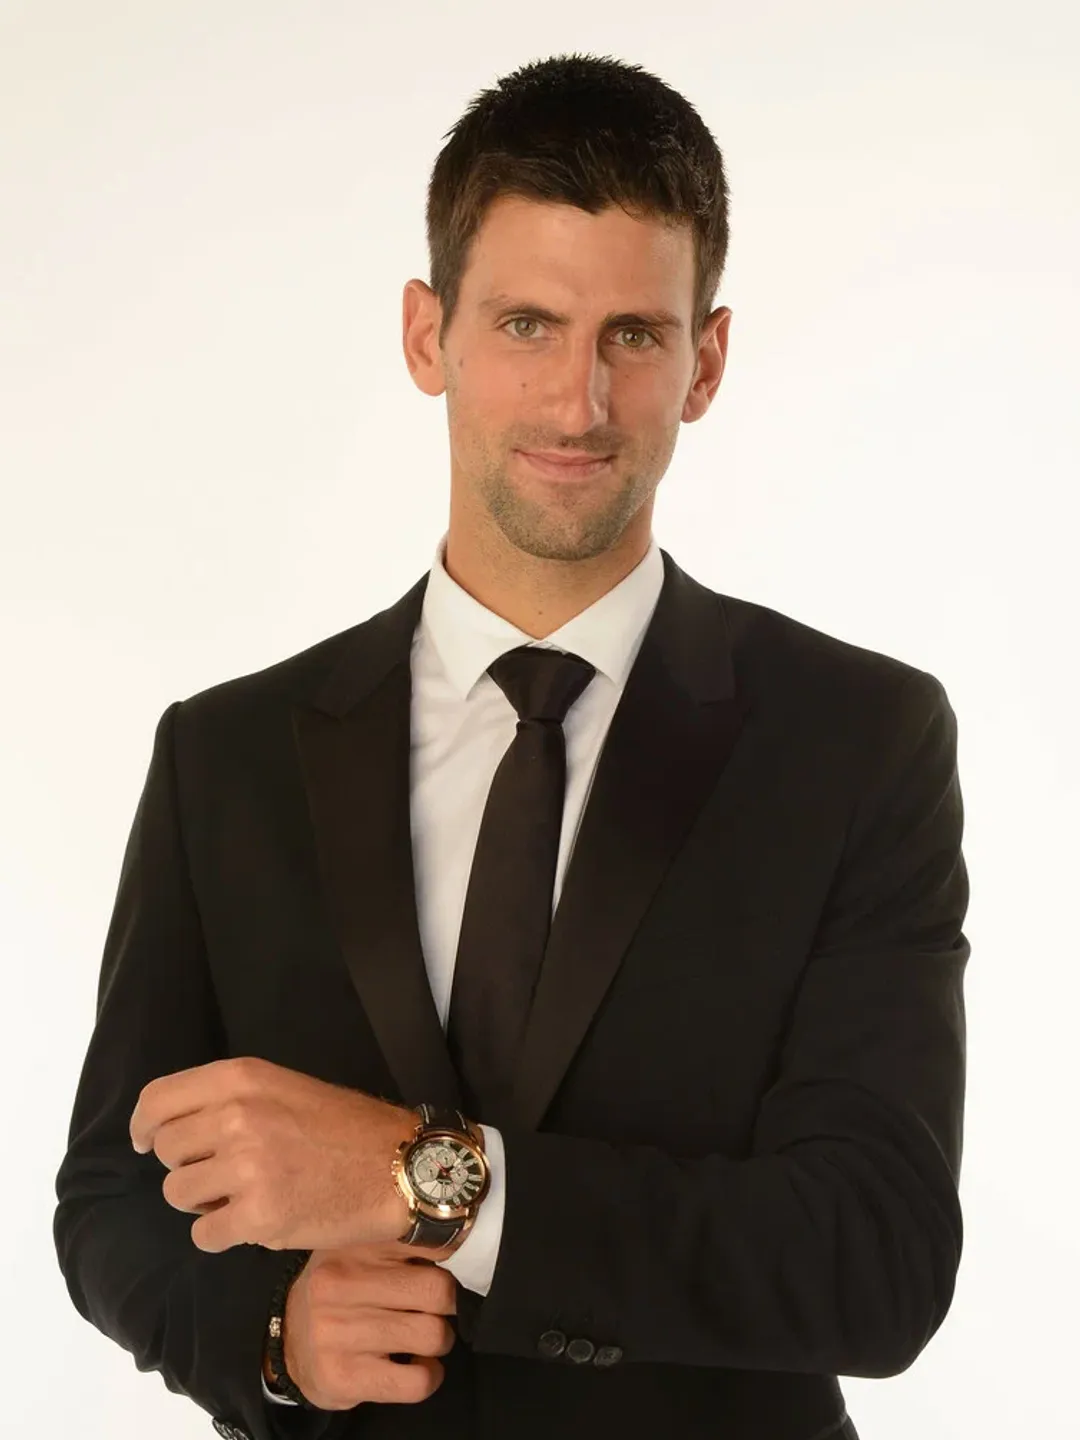 Novak Djokovic young age